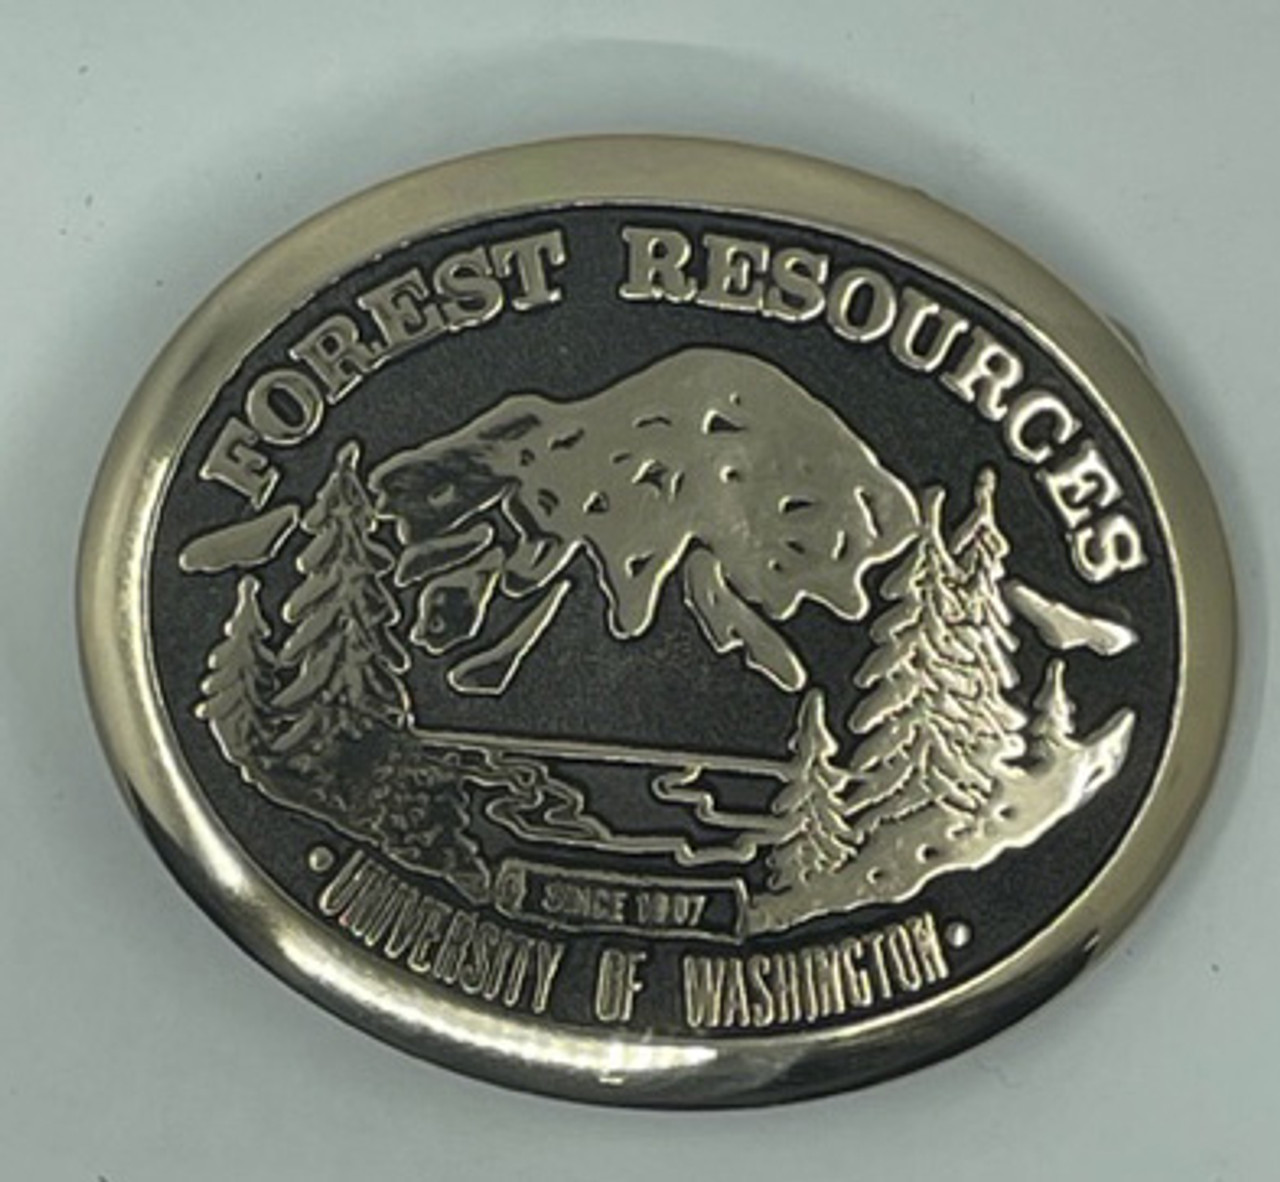 University of Washington Forest Resources Buckle